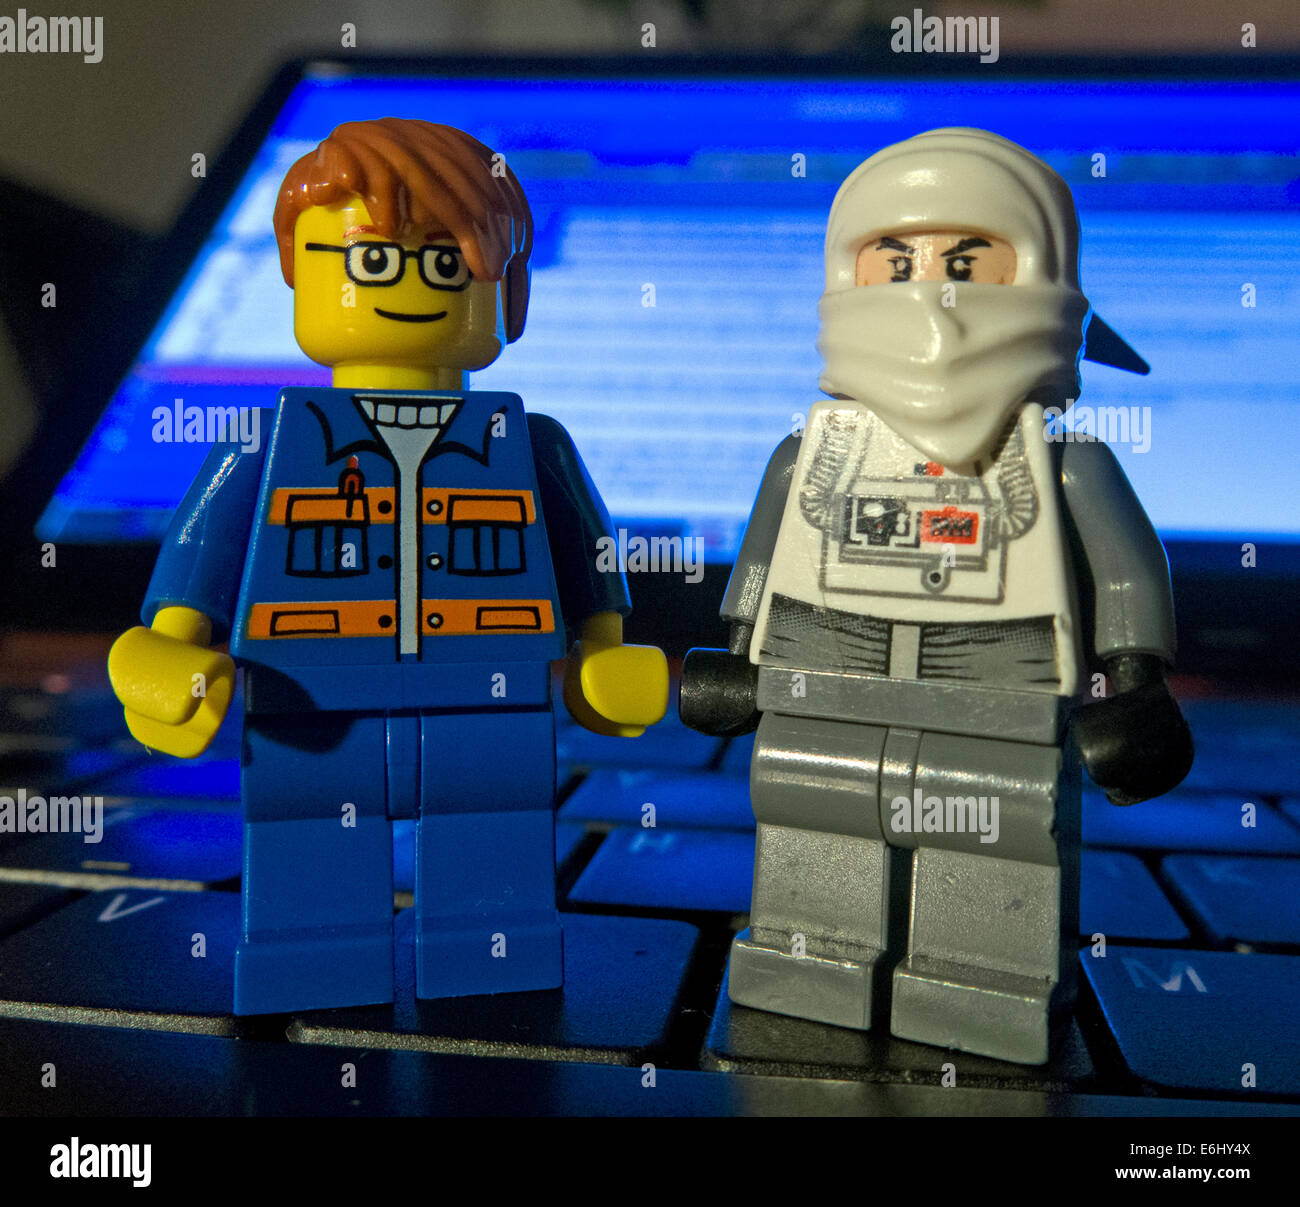 Two Lego men on a laptop keyboard Stock Photo